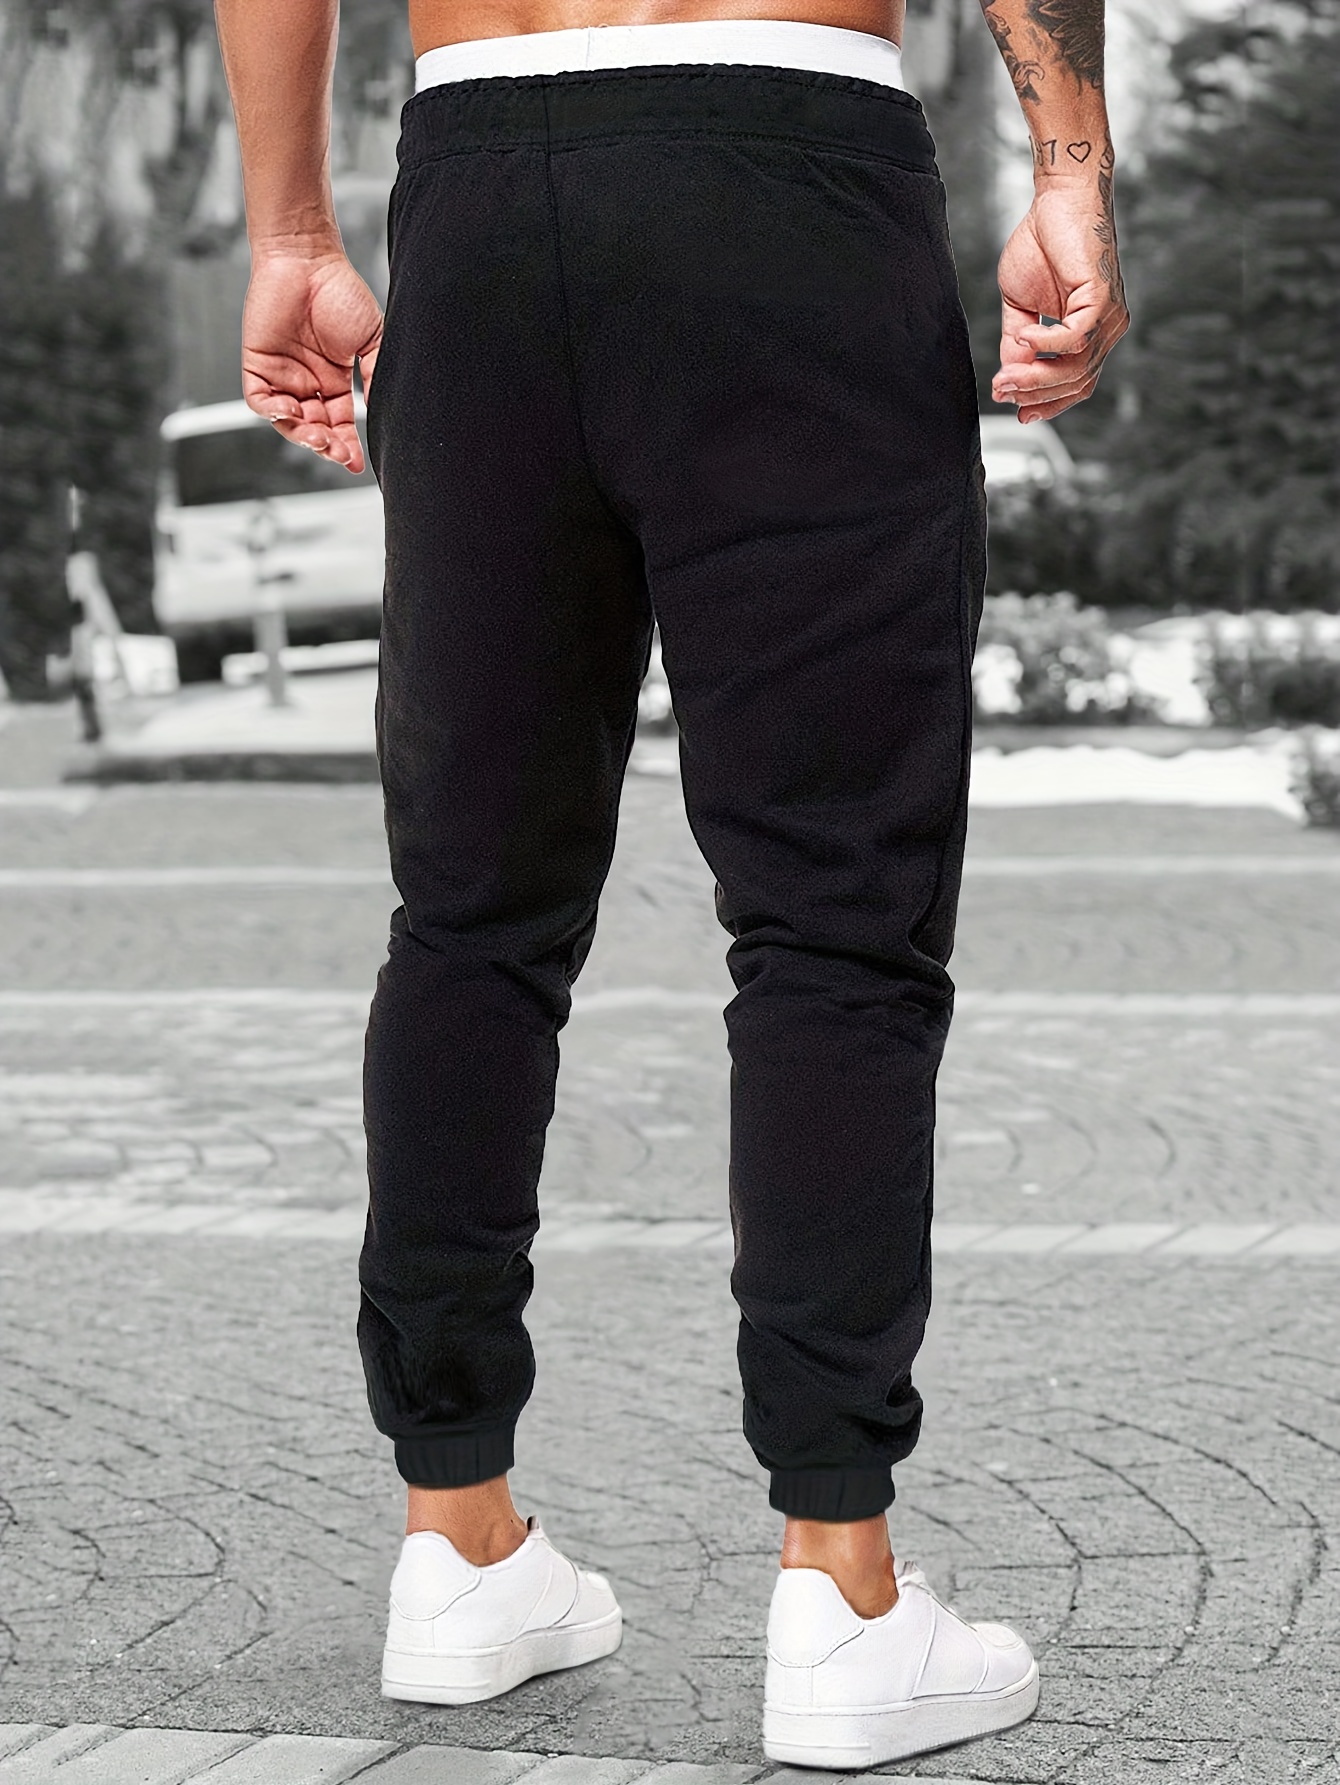 Black Sweatpants For Men